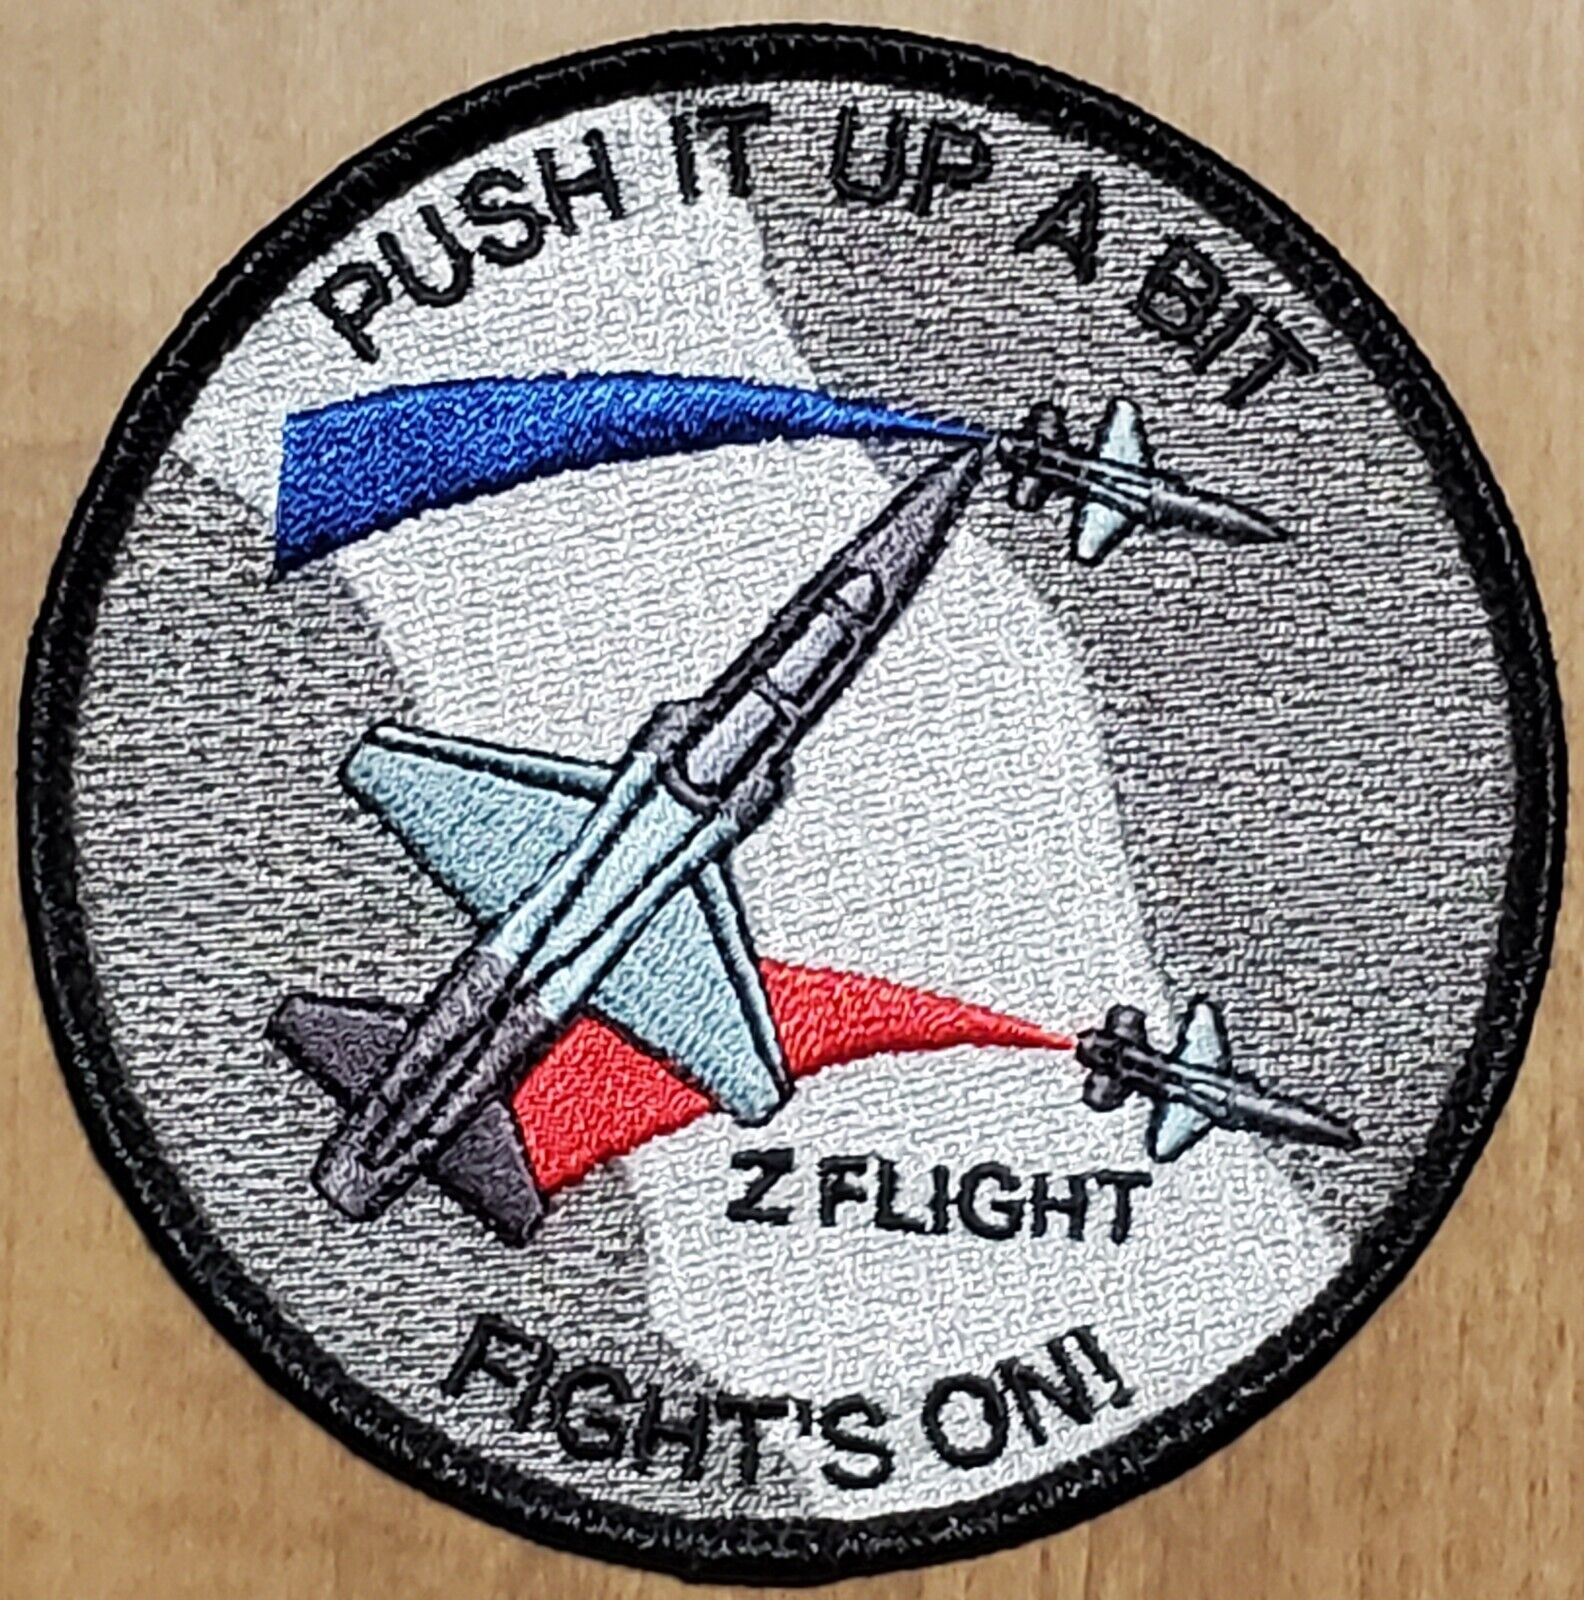 USAF AIR FORCE PILOT / NAVIGATION TRAINING PATCH CLASS Z-FLIGHT PUSH IT UP A BIT